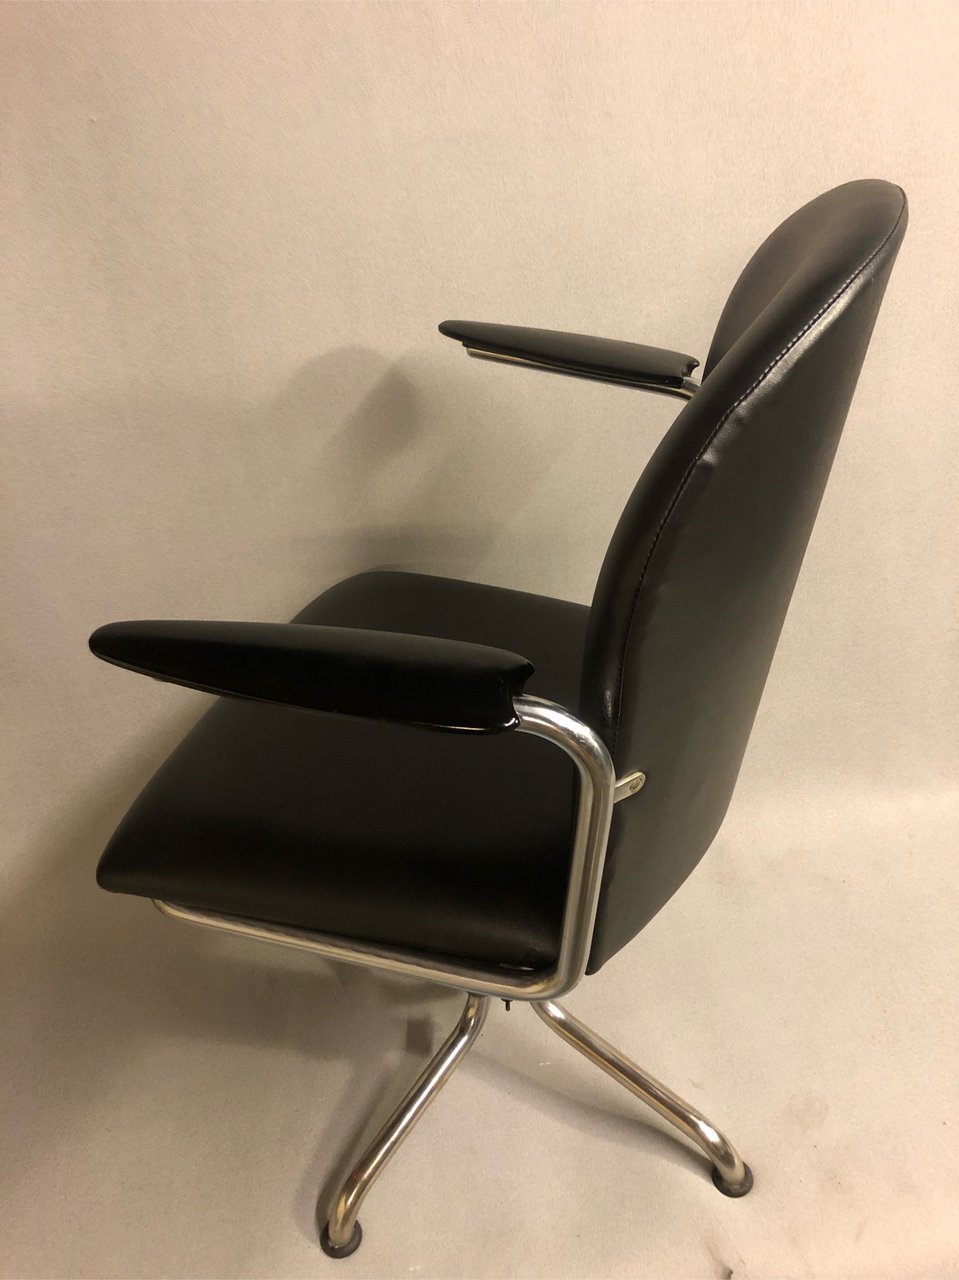 Gispen 356 vintage design office chair image 4